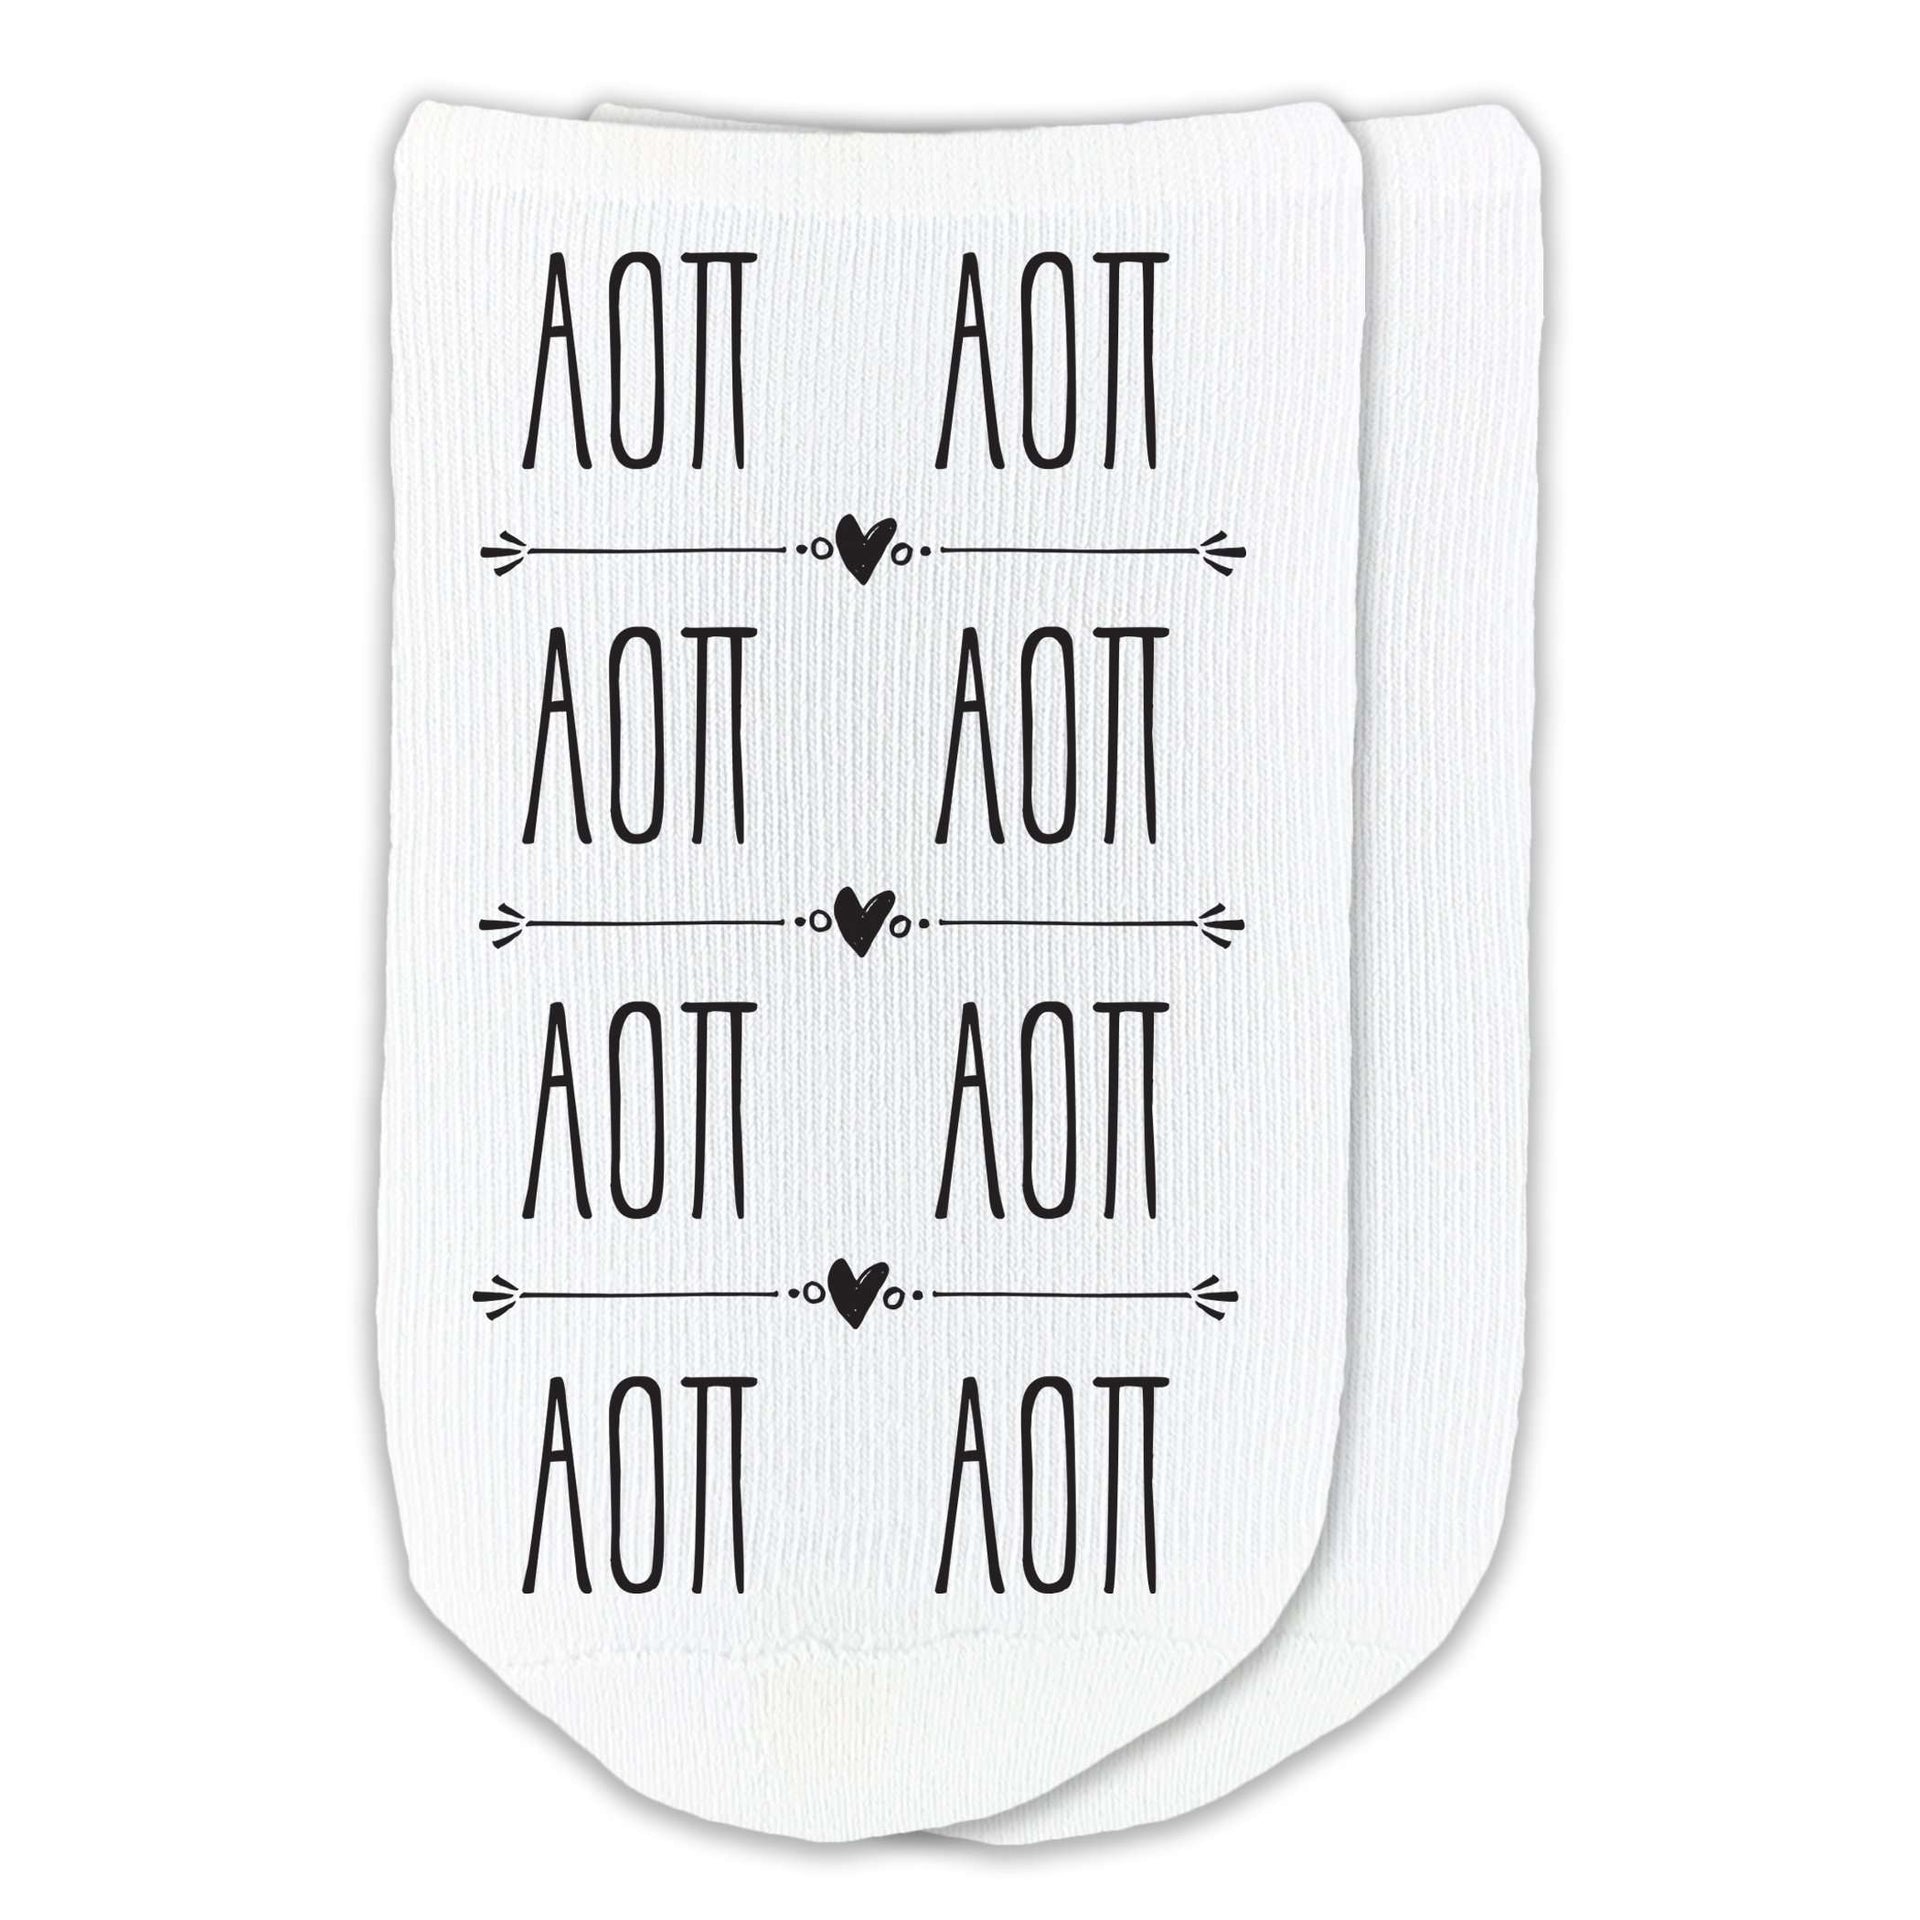 Alpha Omicron Pi sorority letters boho design digitally printed on no show socks.